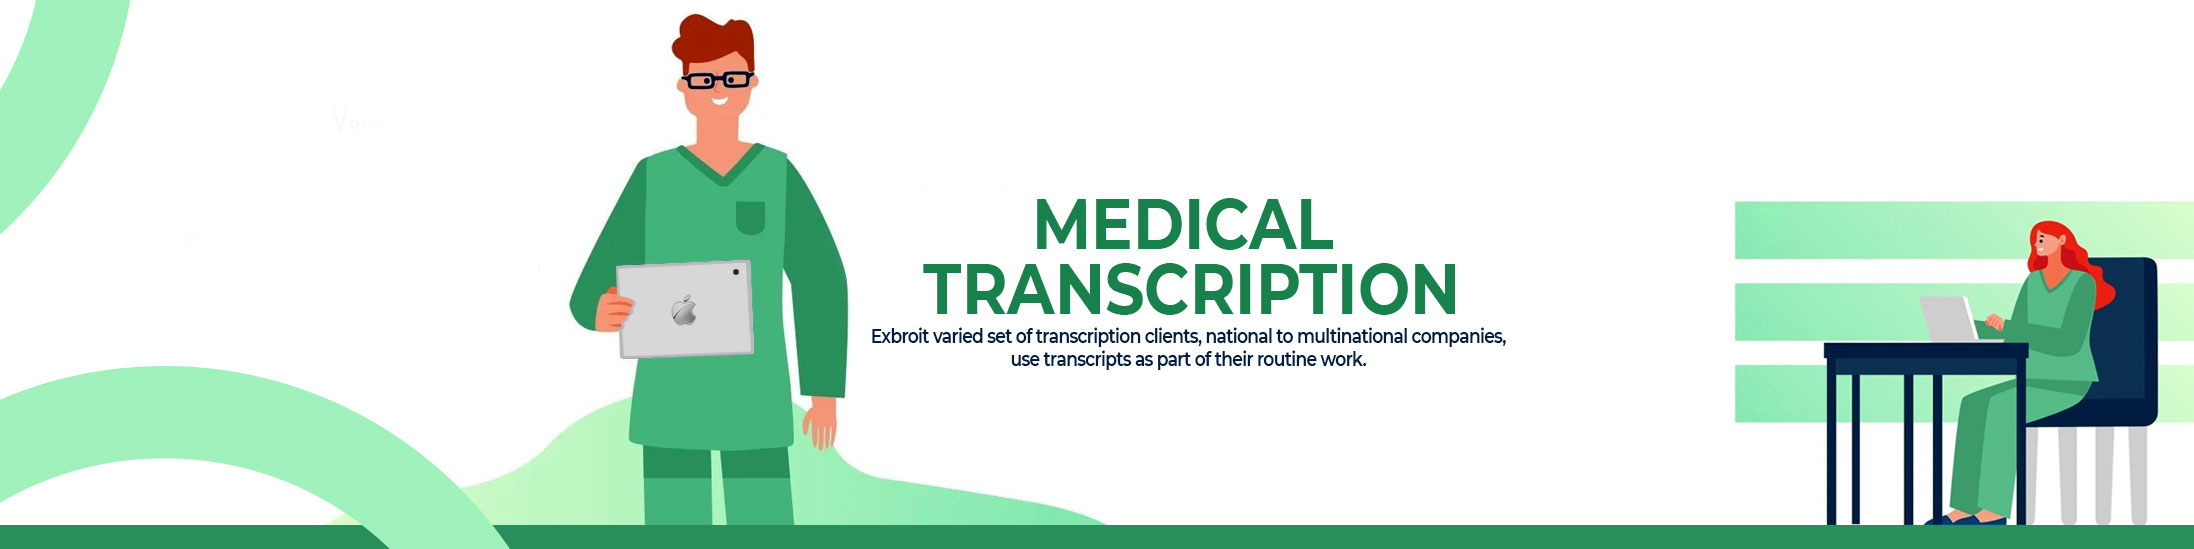 Medical Transcription Service